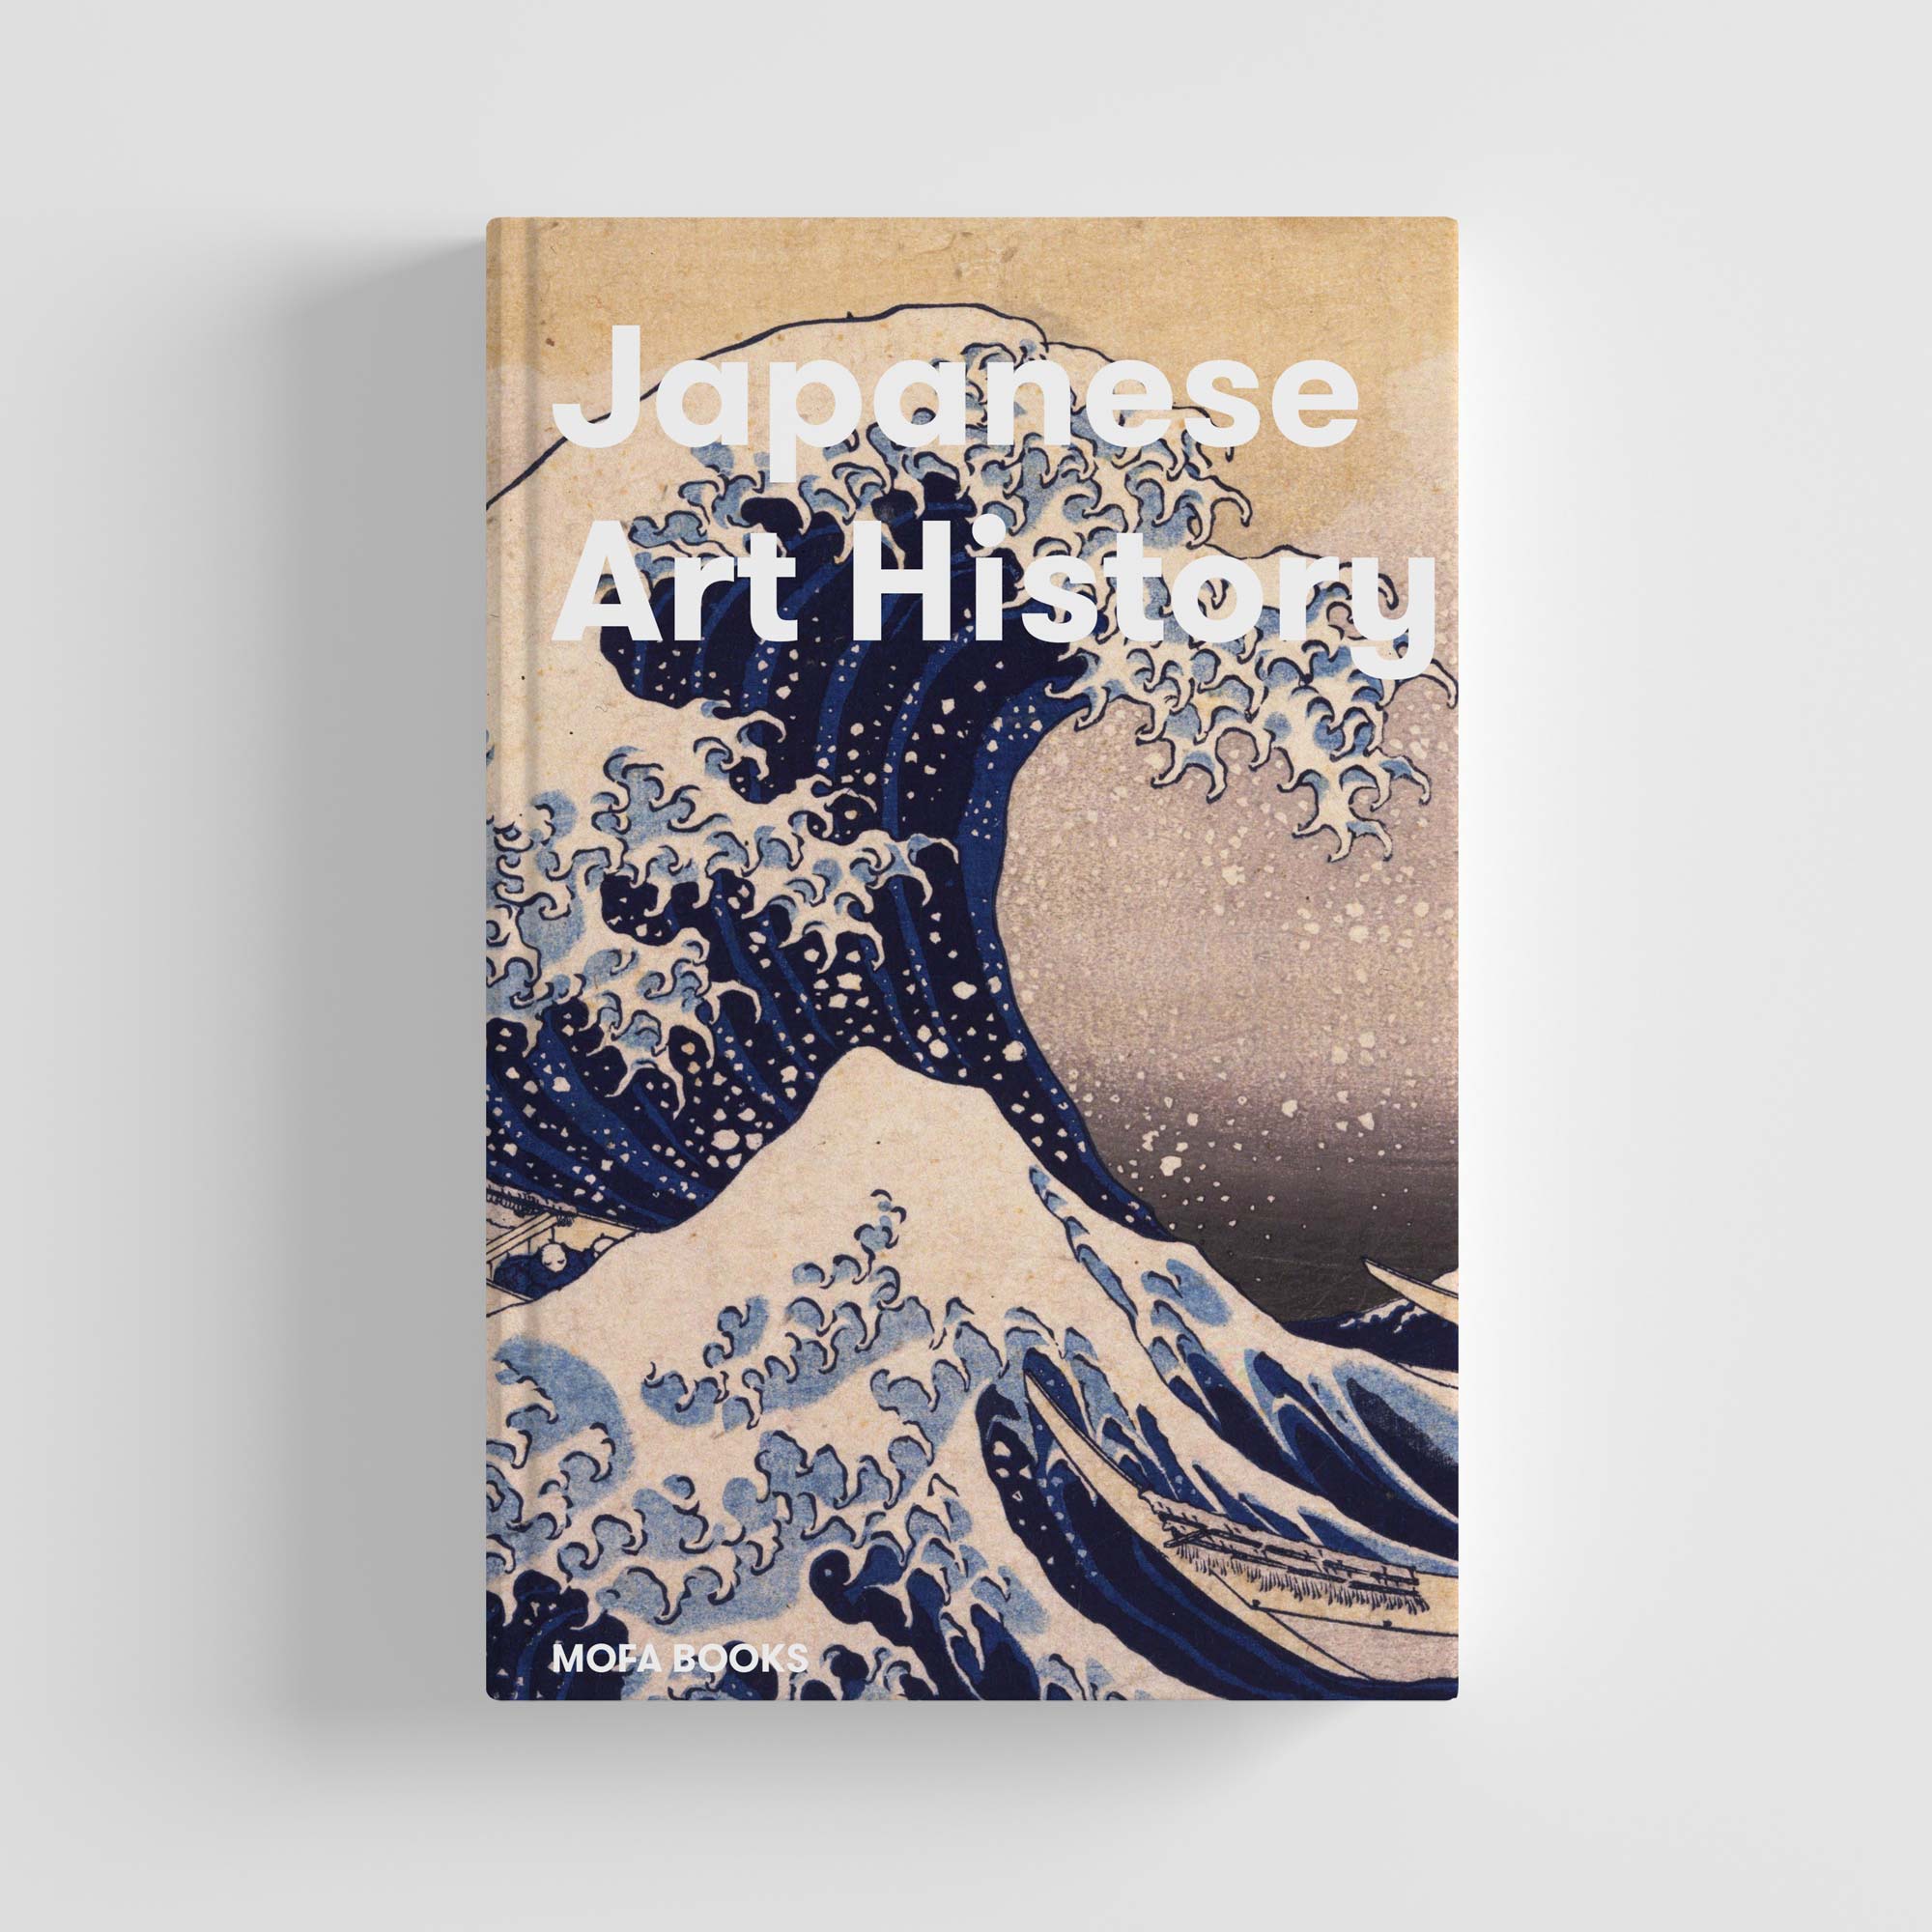 Japanese Art History